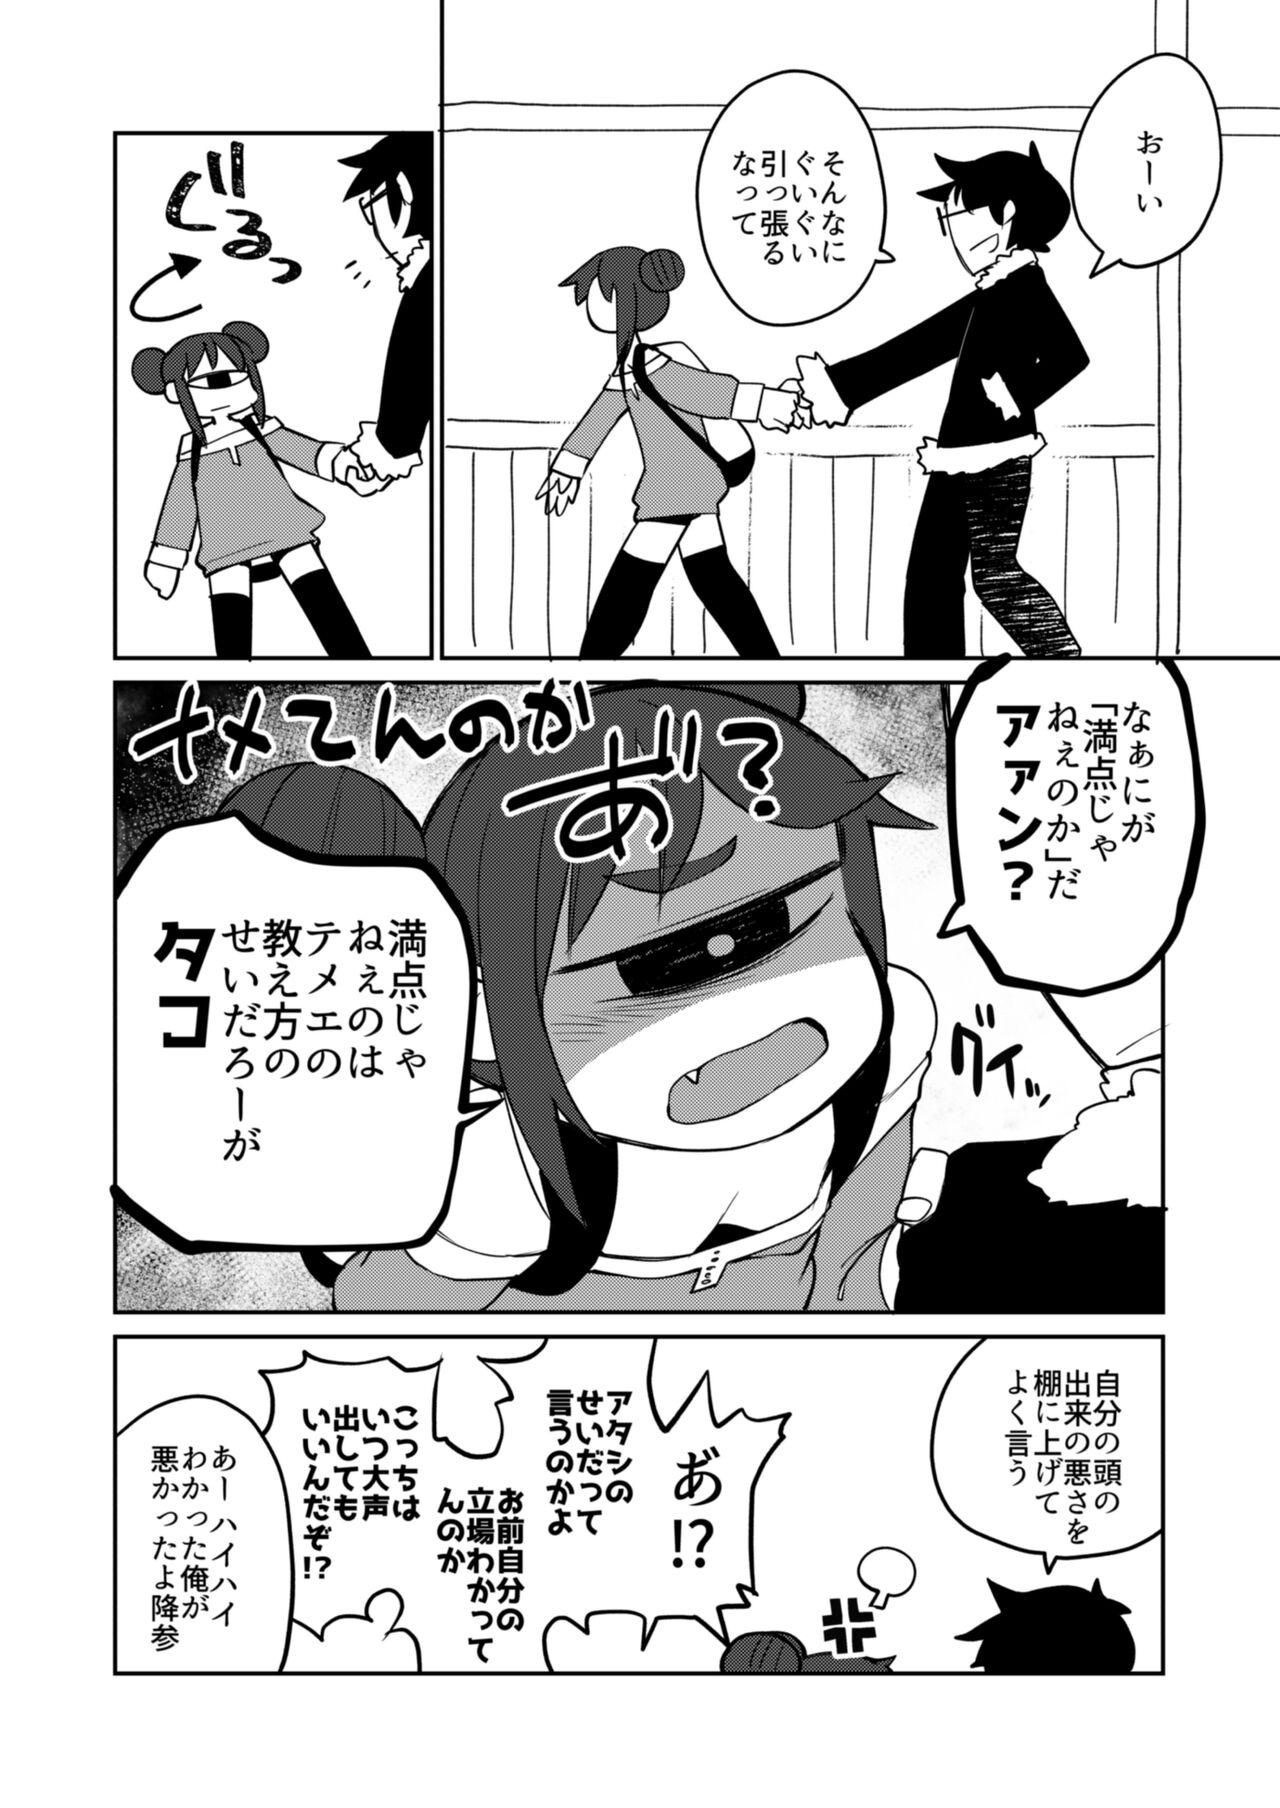 Women Sucking Dicks Kouhai no Tangan-chan #6 - Original 1080p - Page 6